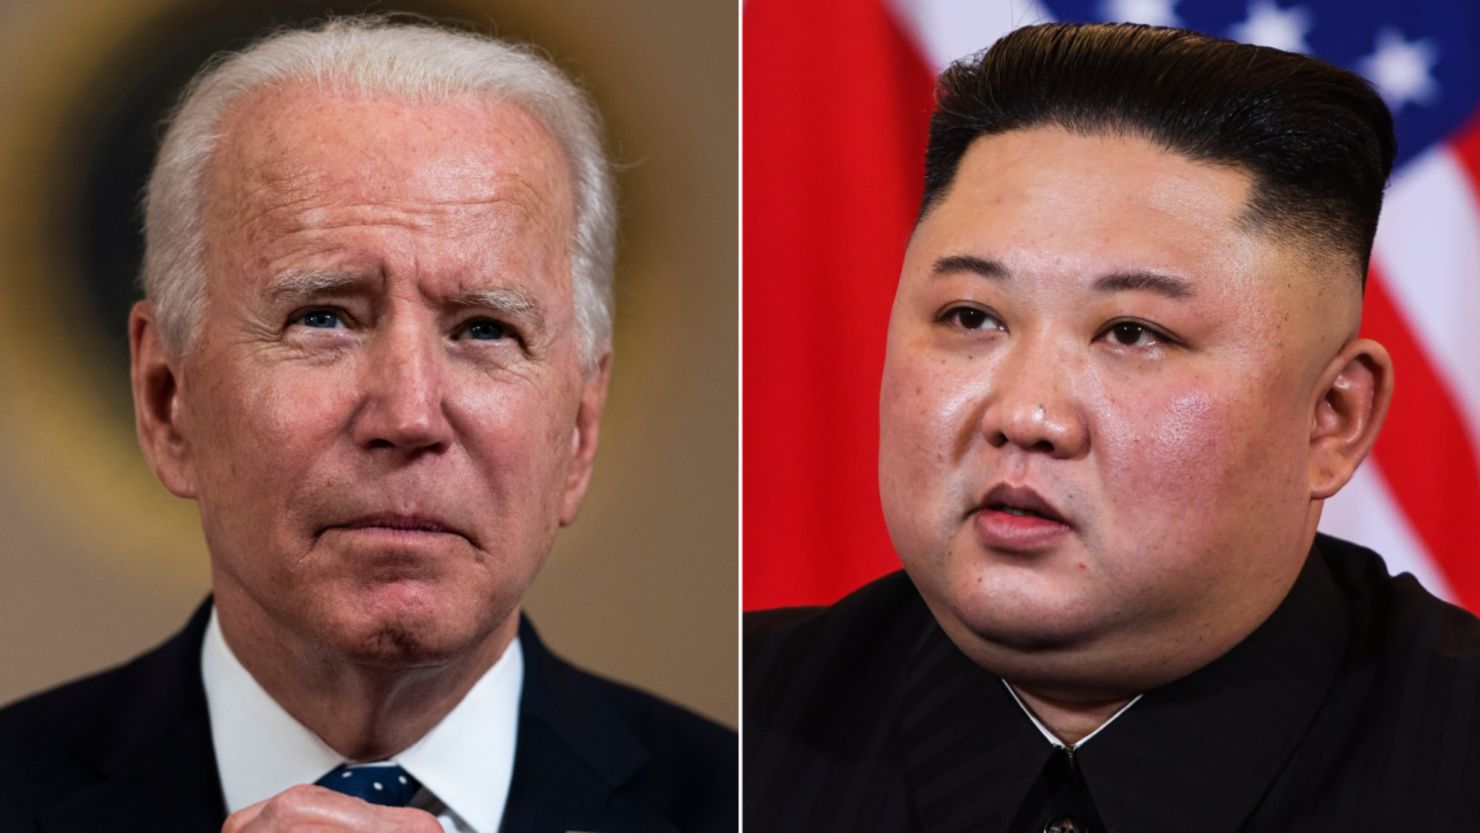 US President Joe Biden and North Korean leader Kim Jong Un both face domestic concerns.